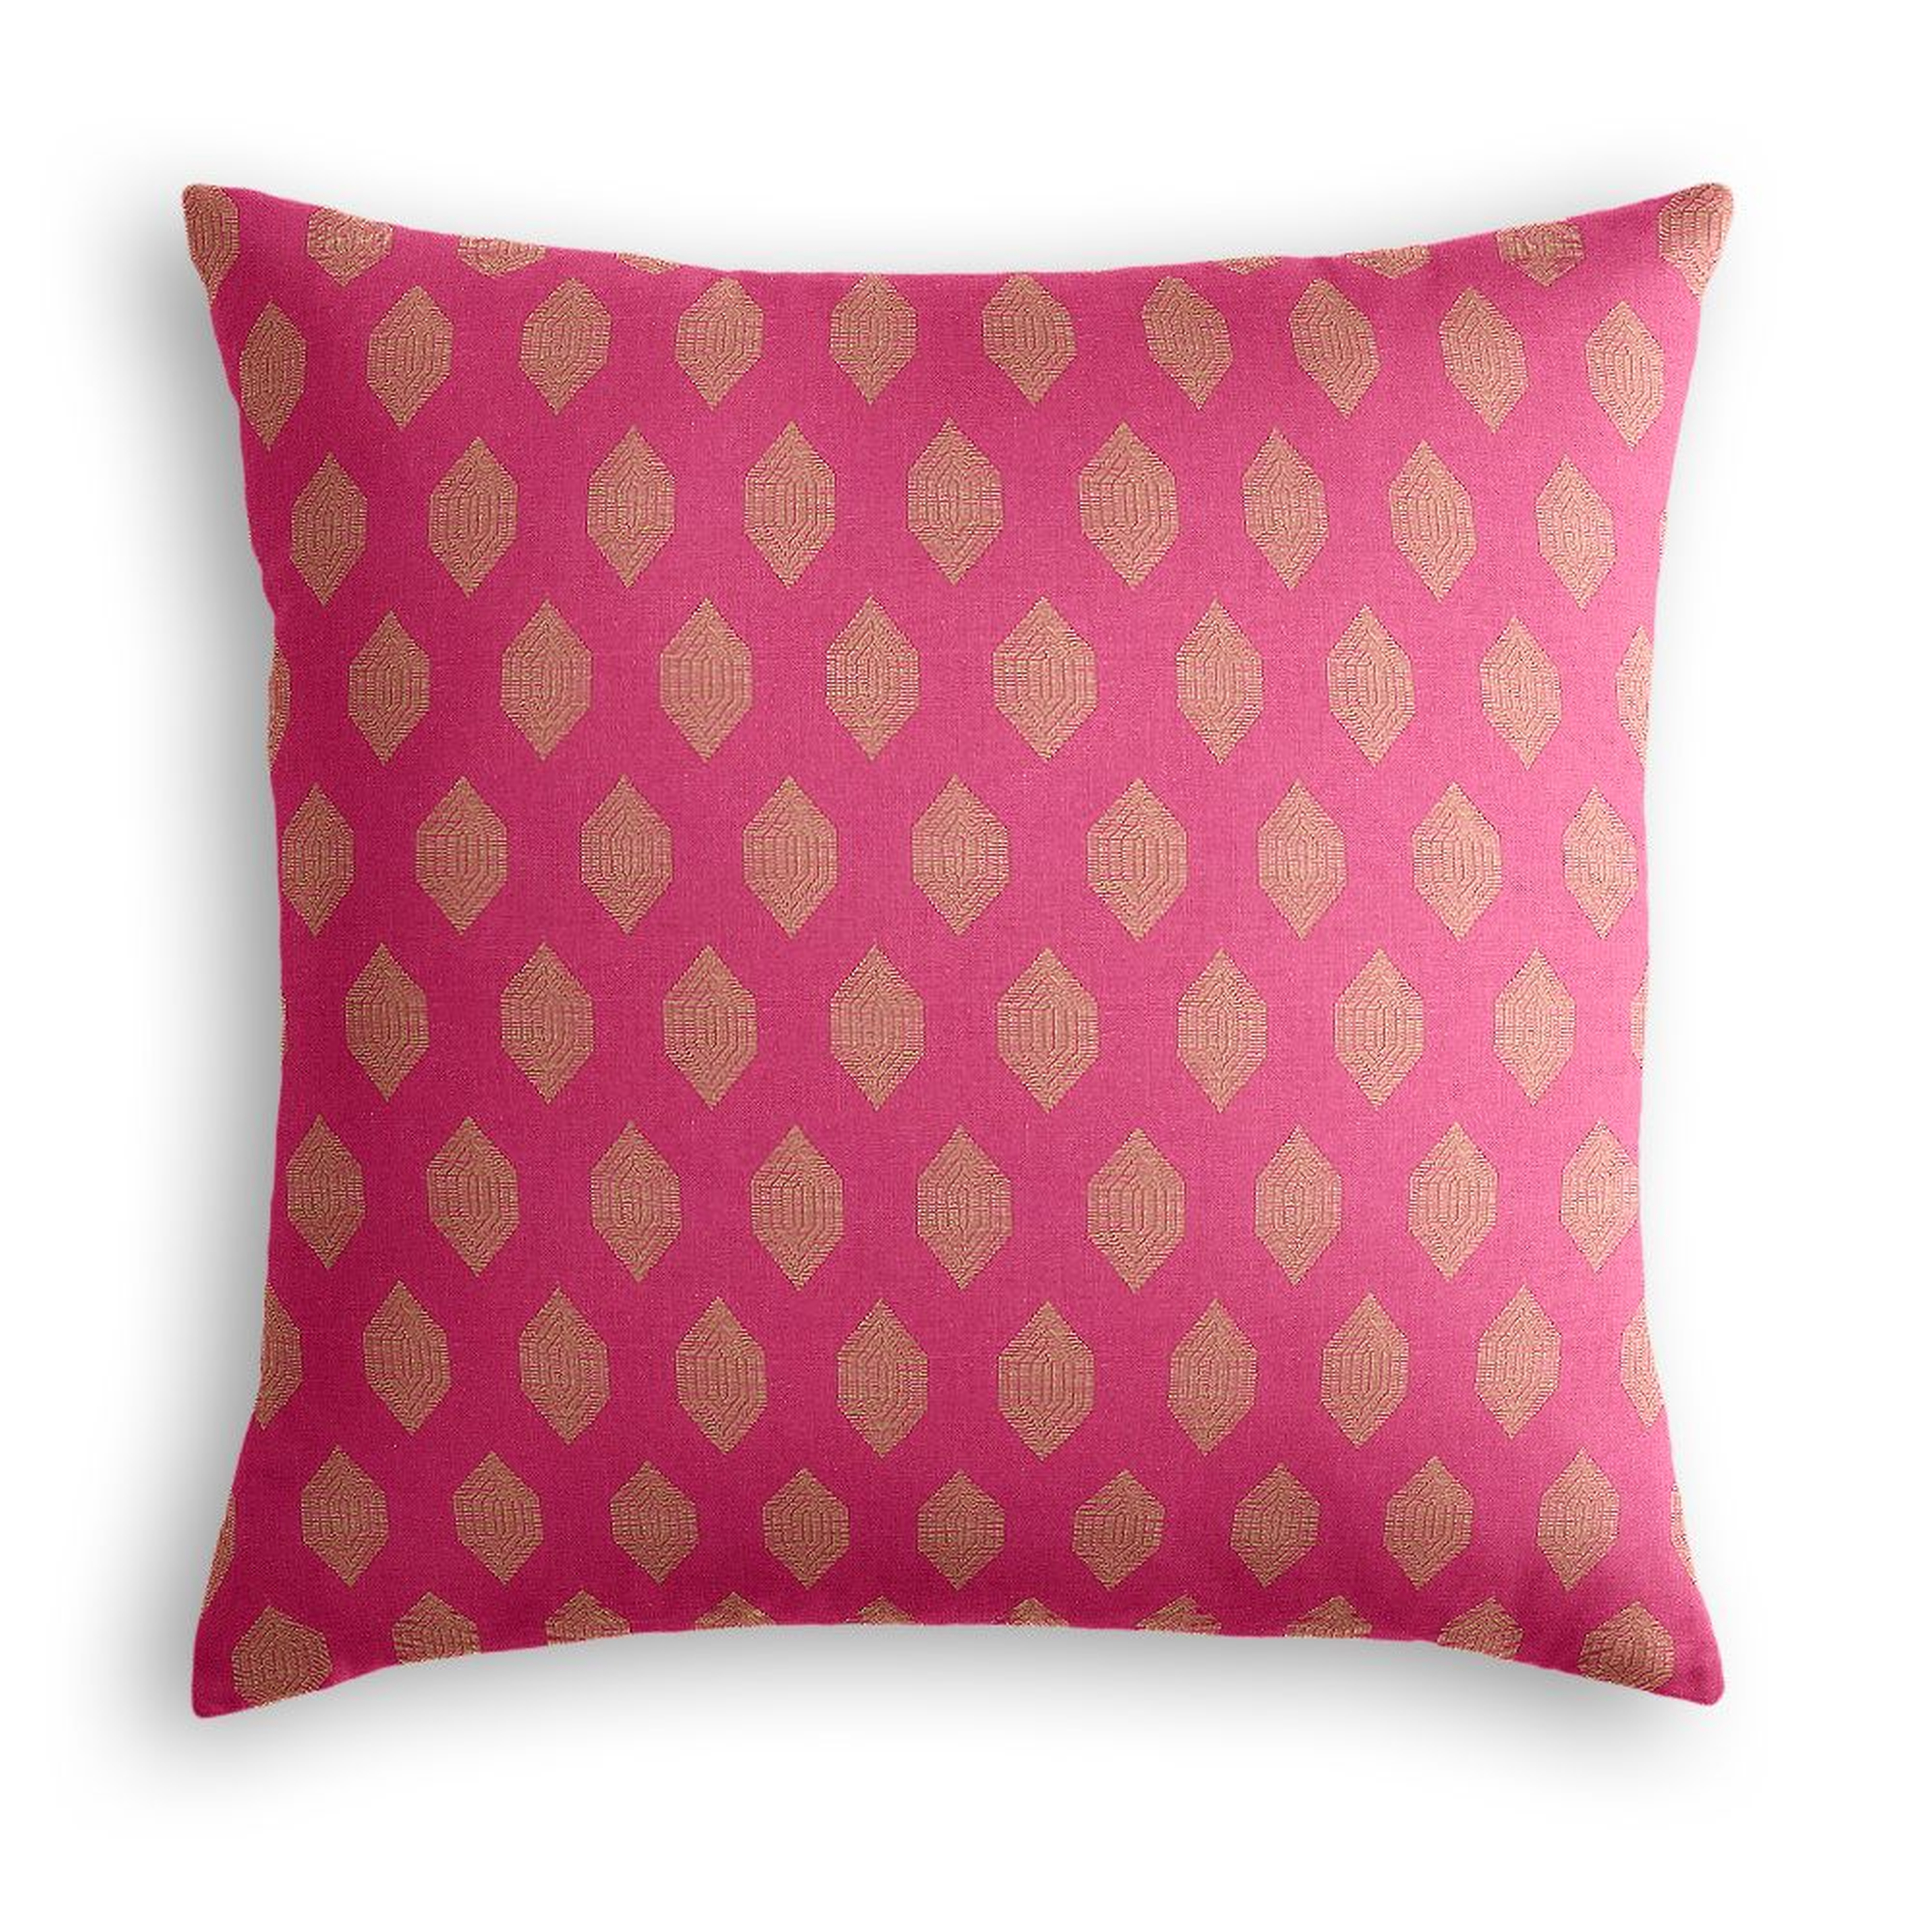 Pink & orange diamond throw pillow - 20" Sq. - Down insert - Loom Decor